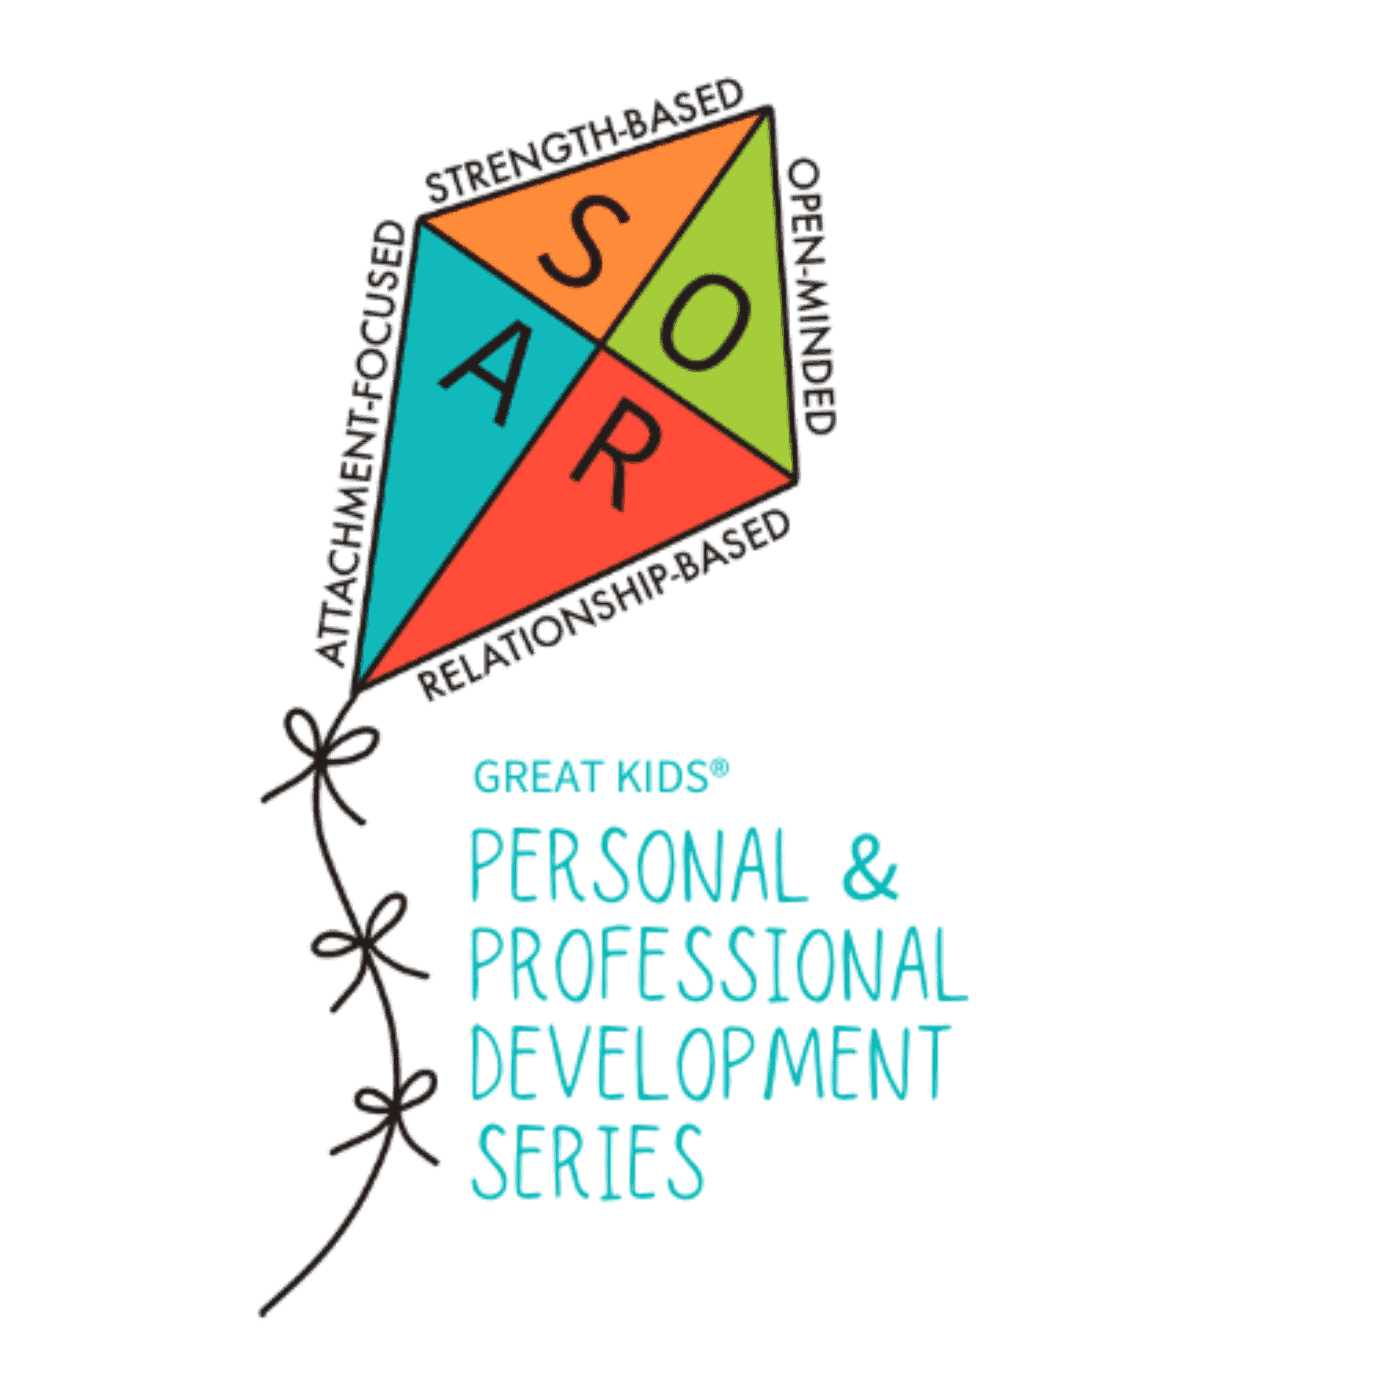 Professional development series logo